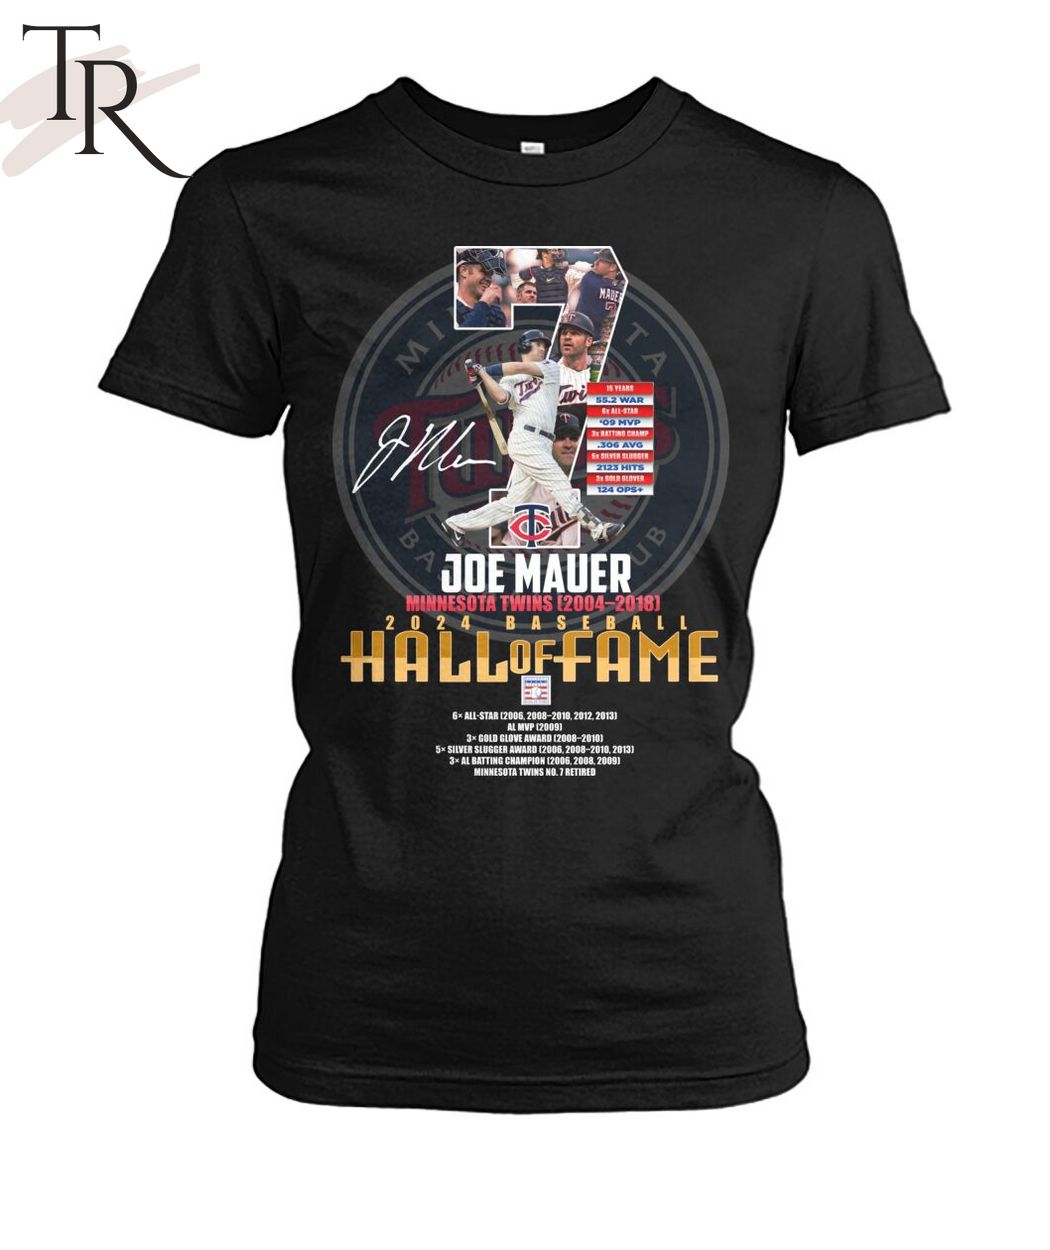 Joe Mauer Minnesota Twins 2004 - 2018 2024 Baseball Hall Of Fame T-Shirt